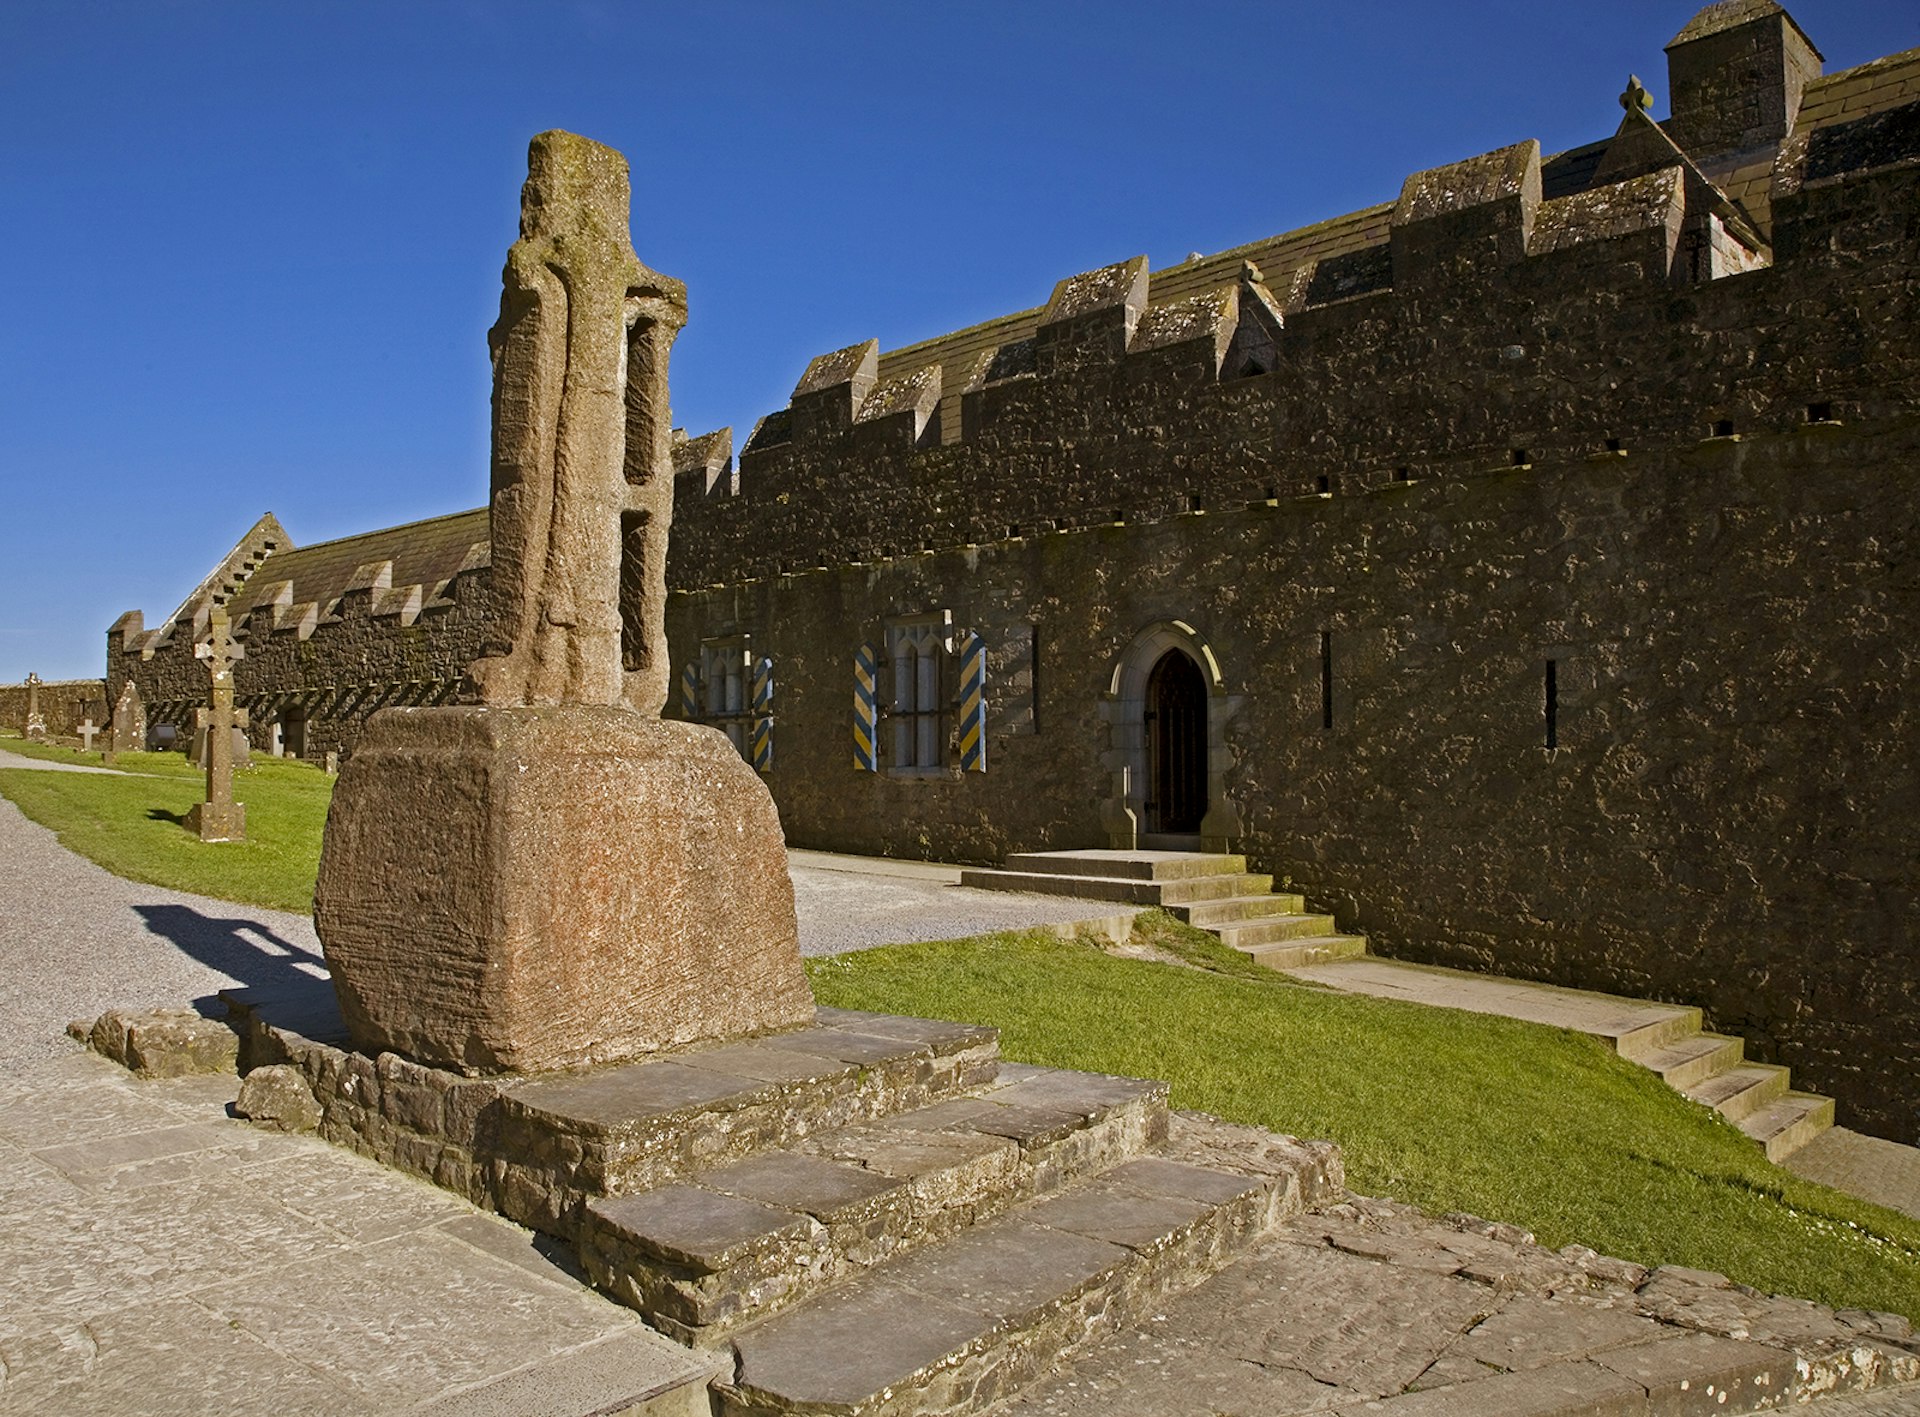 St. Patrick's Cross, Rock of Cashel © Design Pics/George Munday / Getty Images